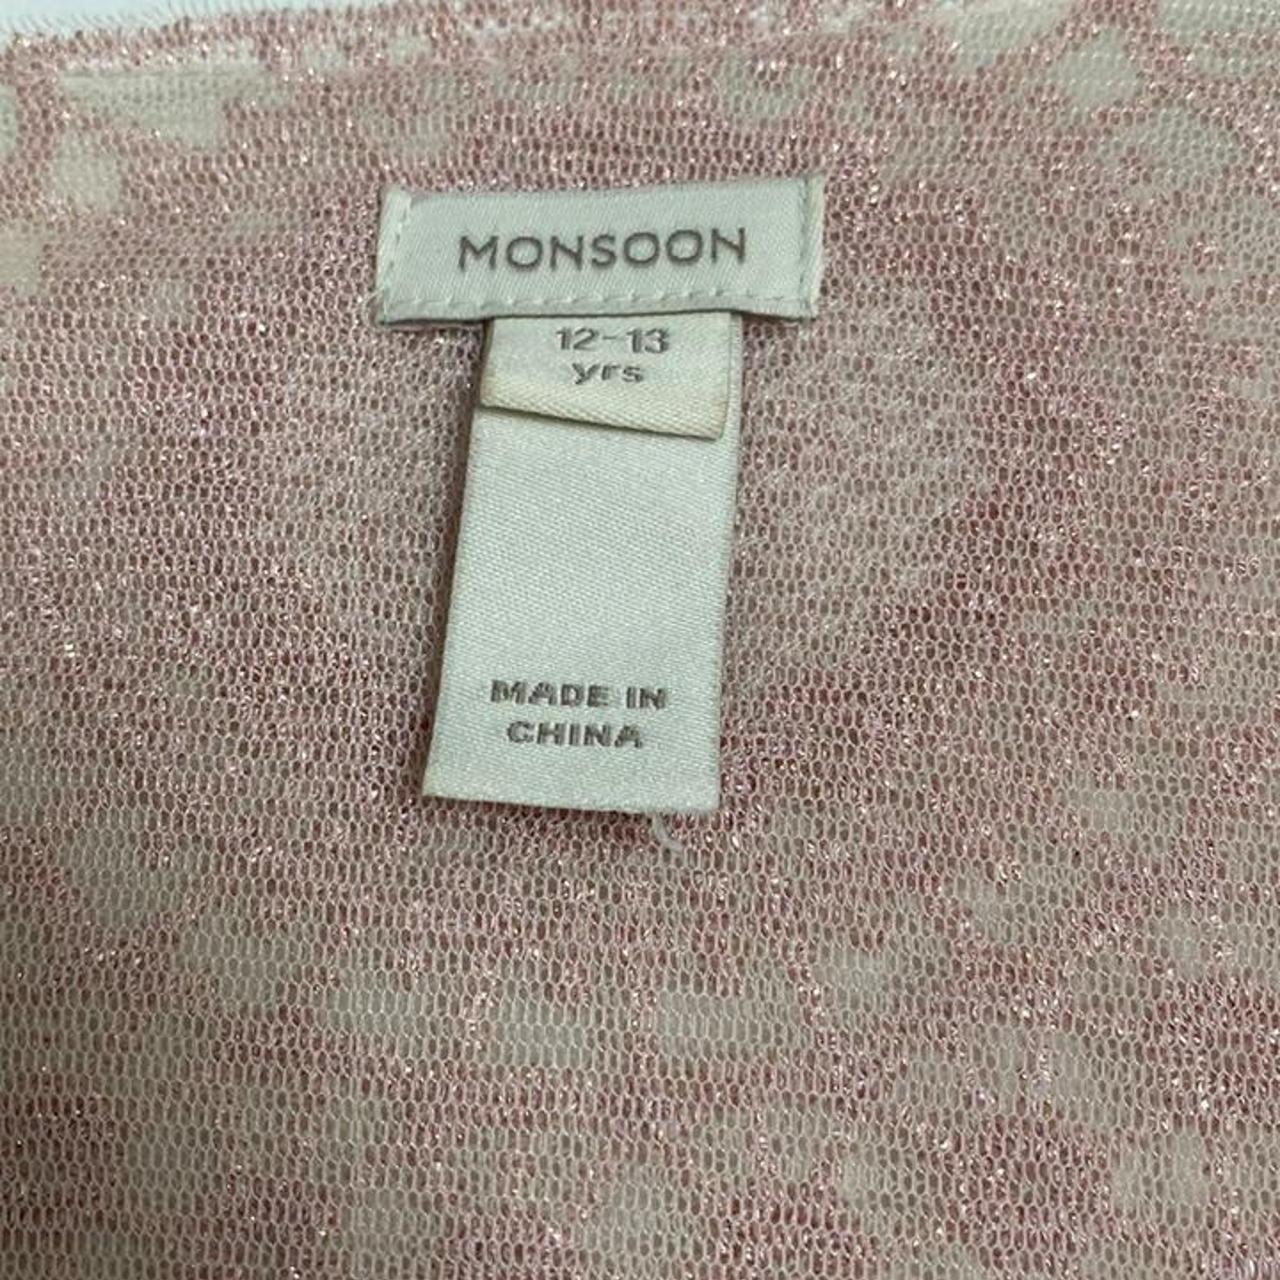 Monsoon Women's Pink Top